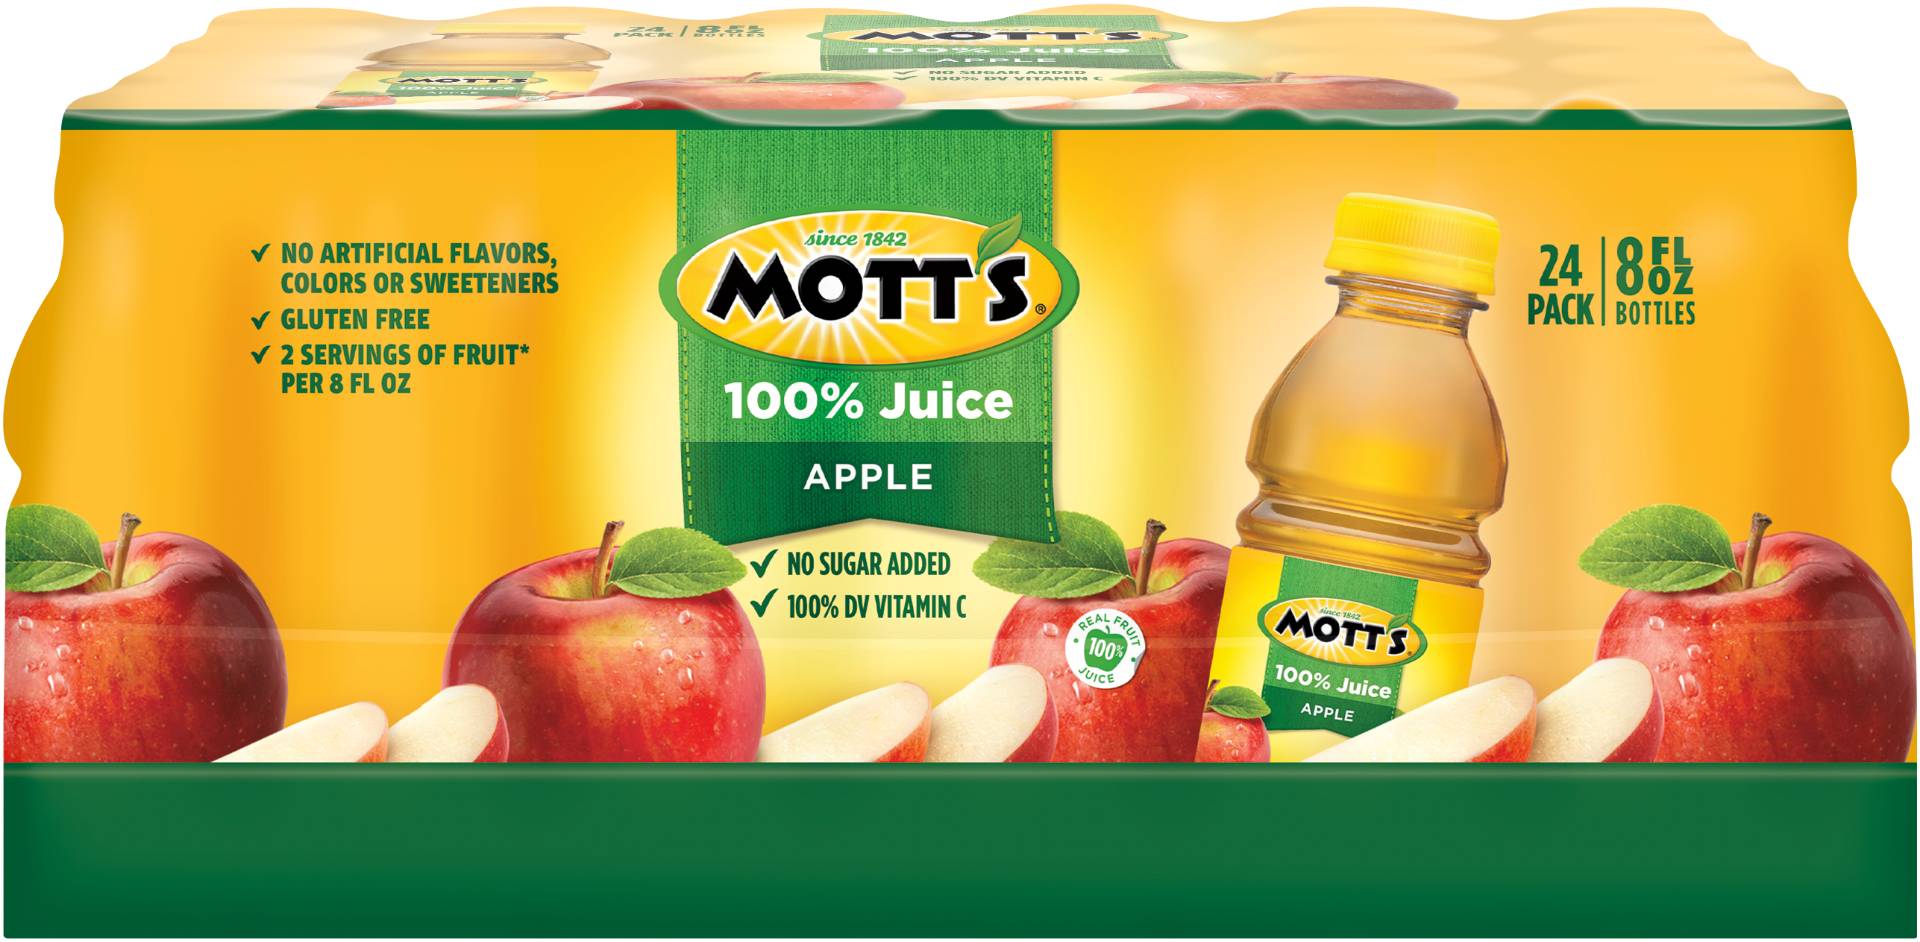 Mott's - Apple Juice -24/8 oz plastic bottles (1X4|1 Unit per Case)